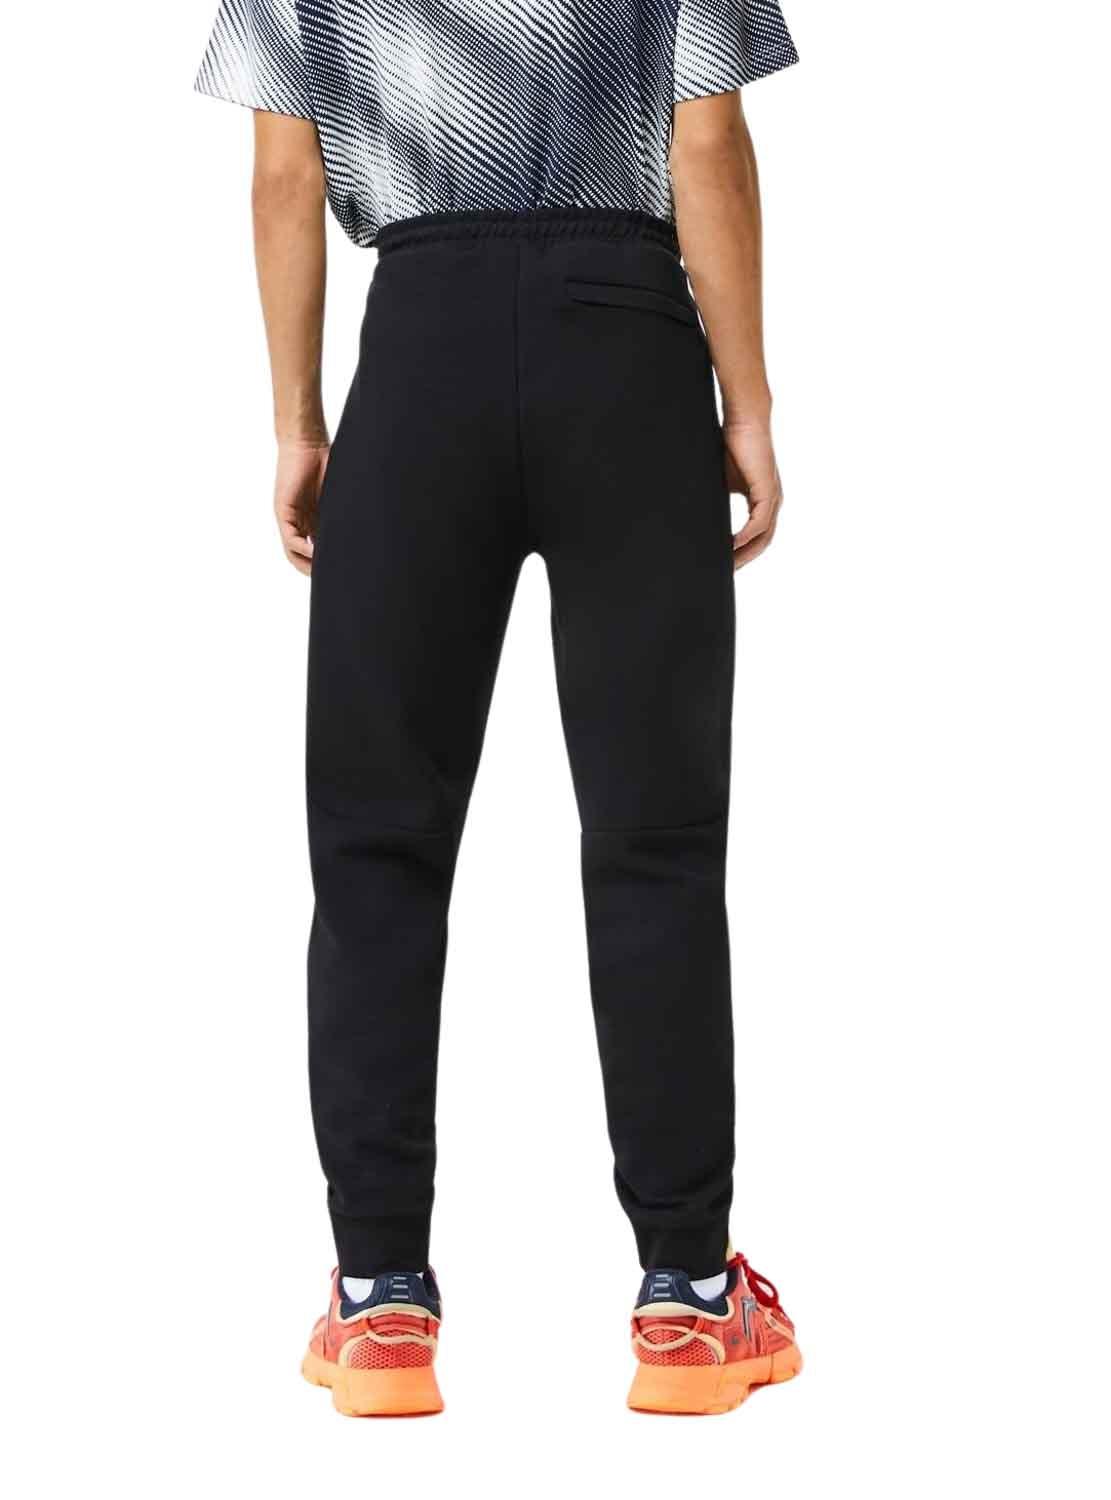 Pantaloni Lacoste Slim Fit Blu Navy per Uomo